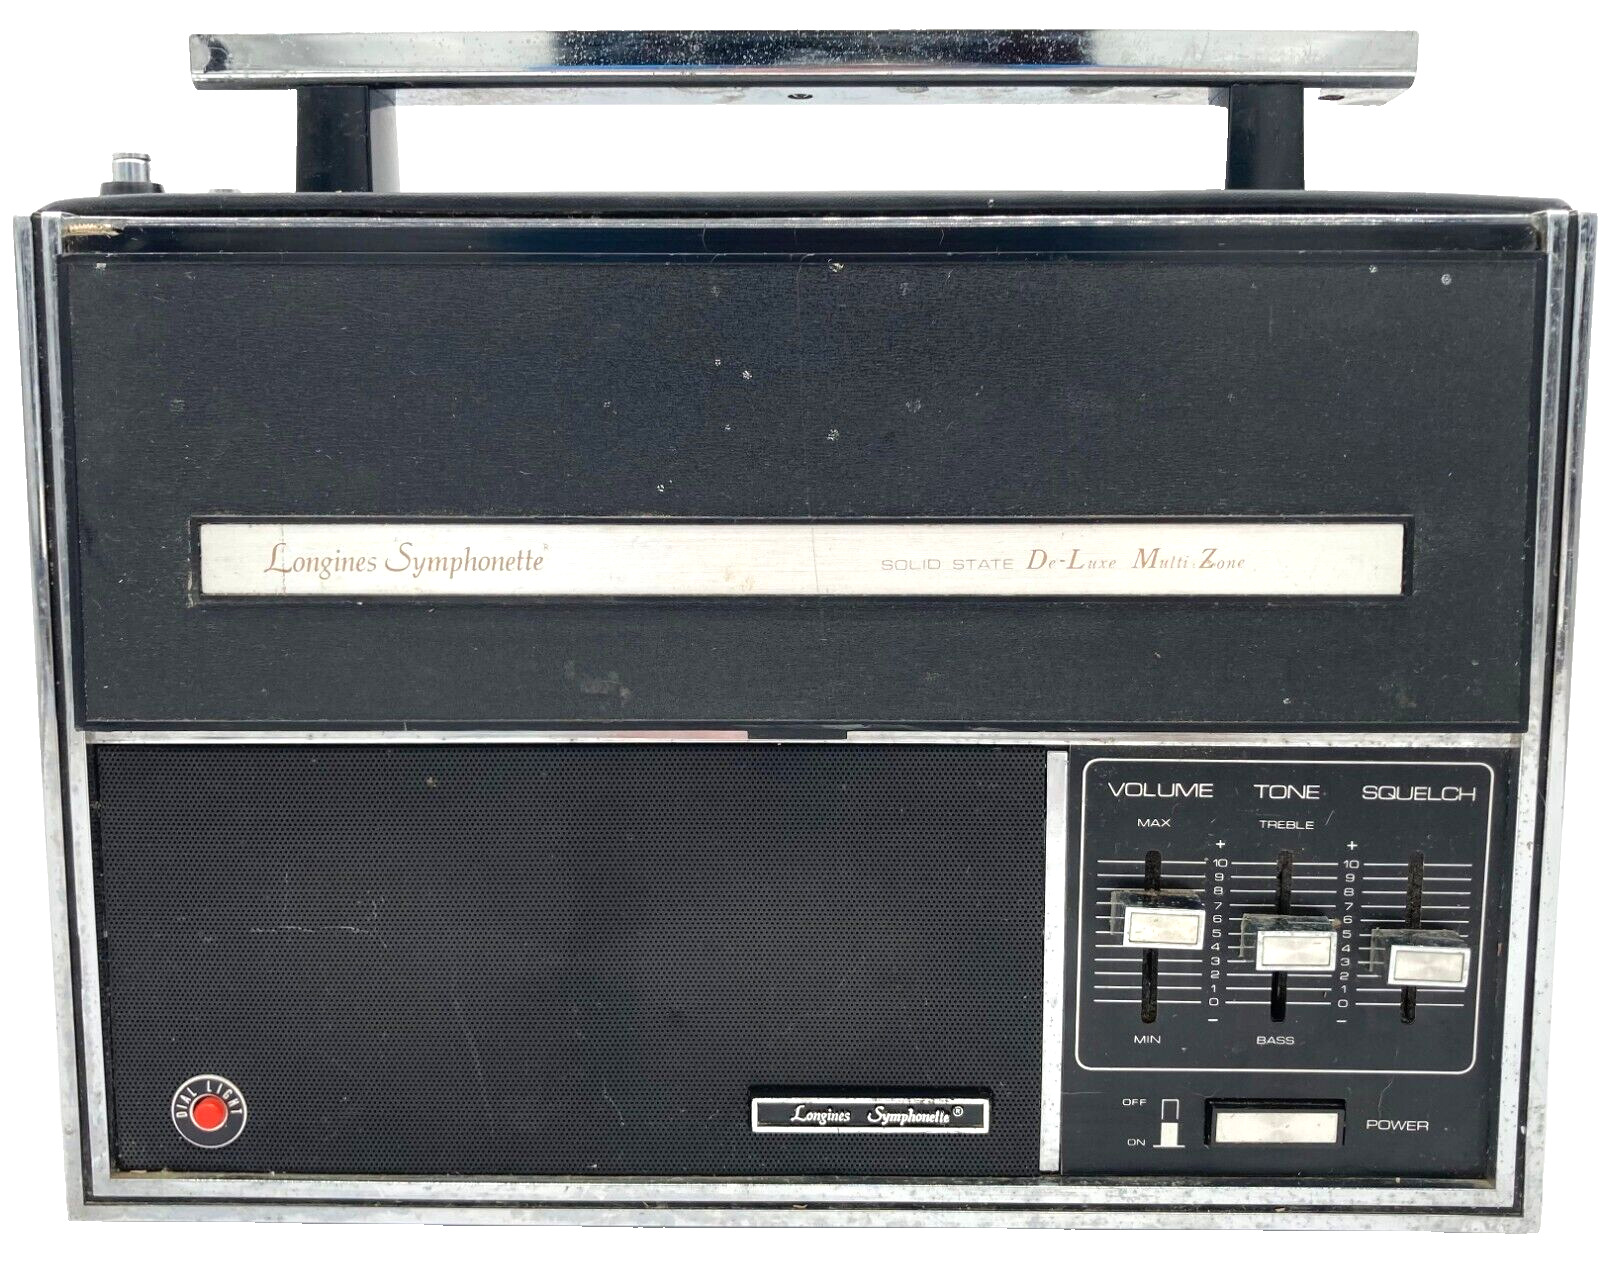 VTG 1975 Solid State Longines Symphonette De-Luxe Multi Zone Radio - READ